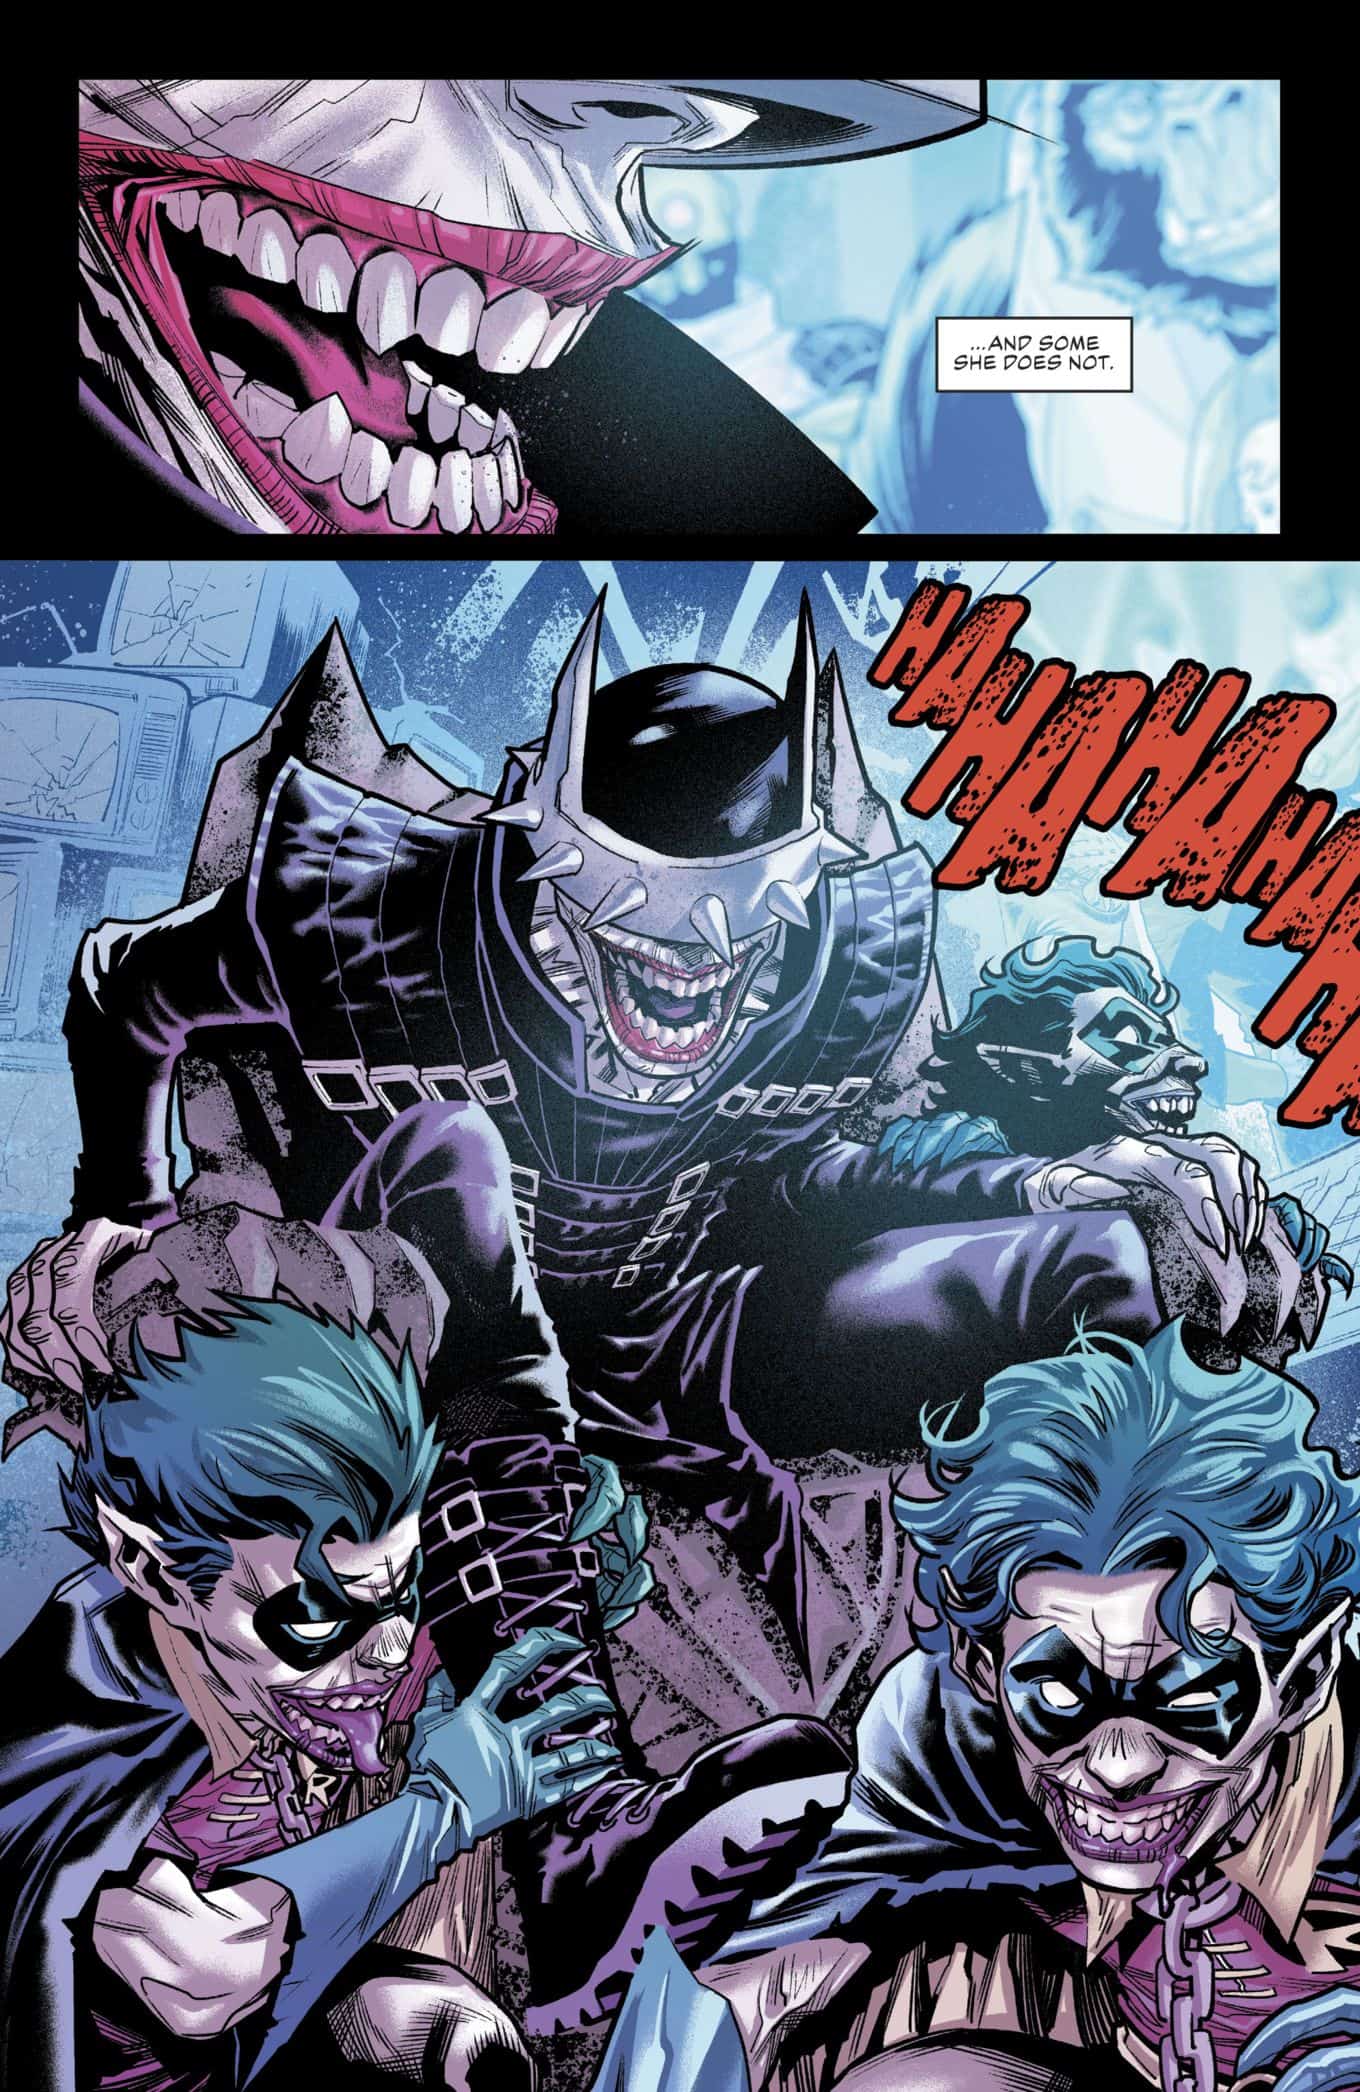 DC Comics Year of the Villain #1 Batman Who Laughs, Legion of Doom,  Leviathan